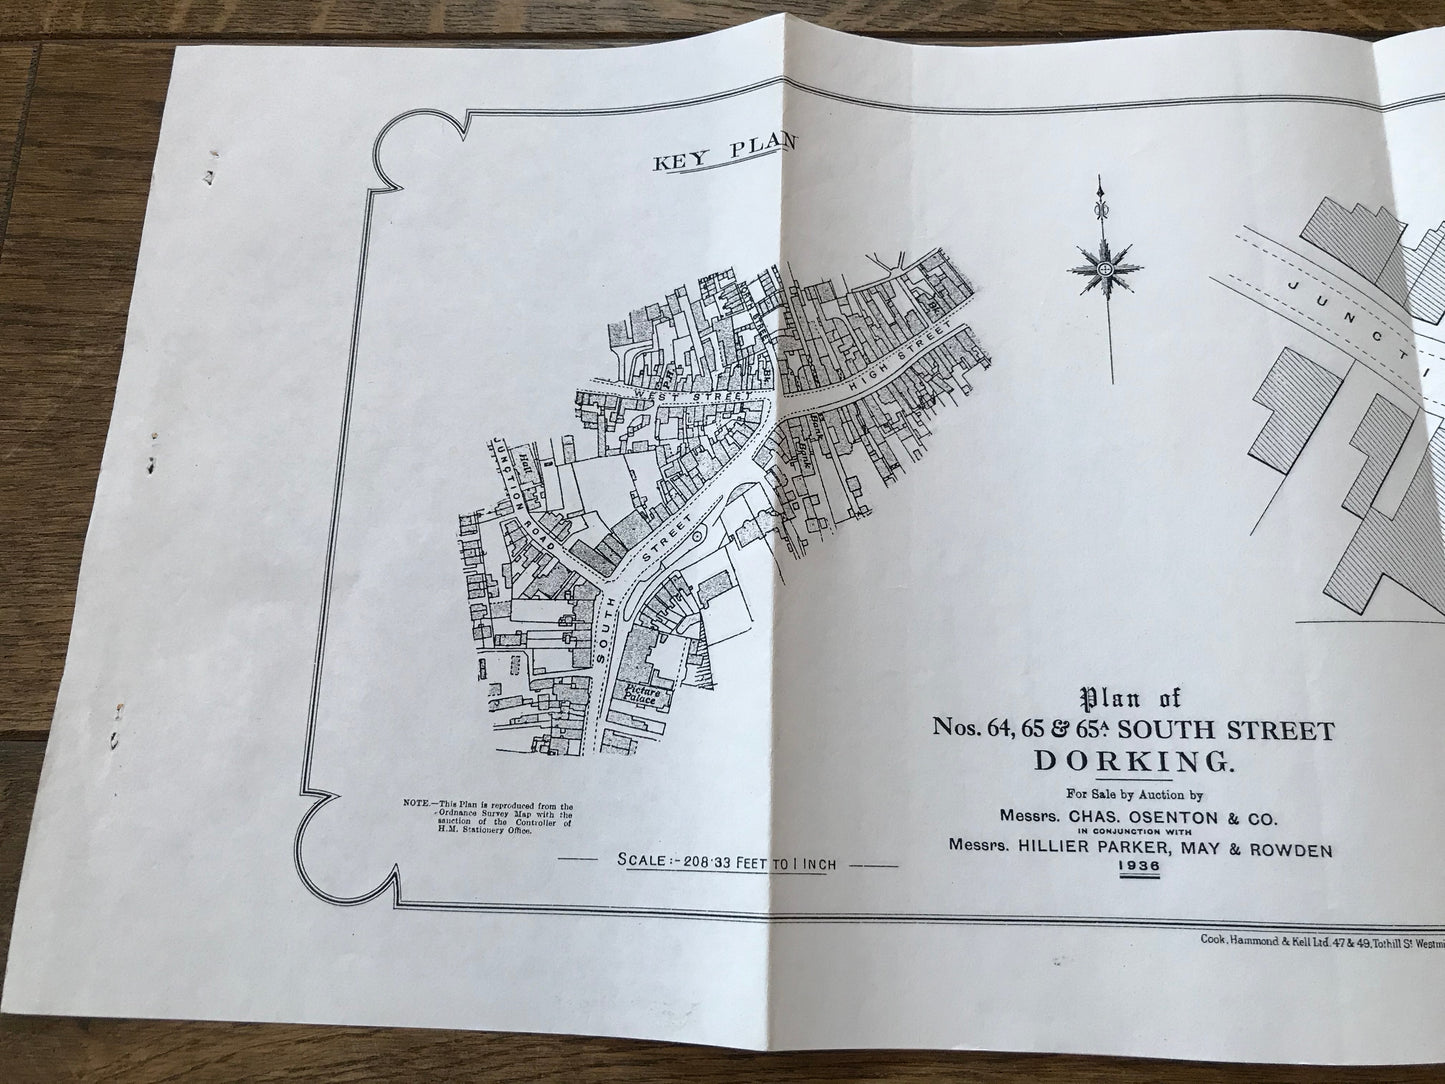 Plan of 64, 65 & 65a South Street Dorking (facsimile)